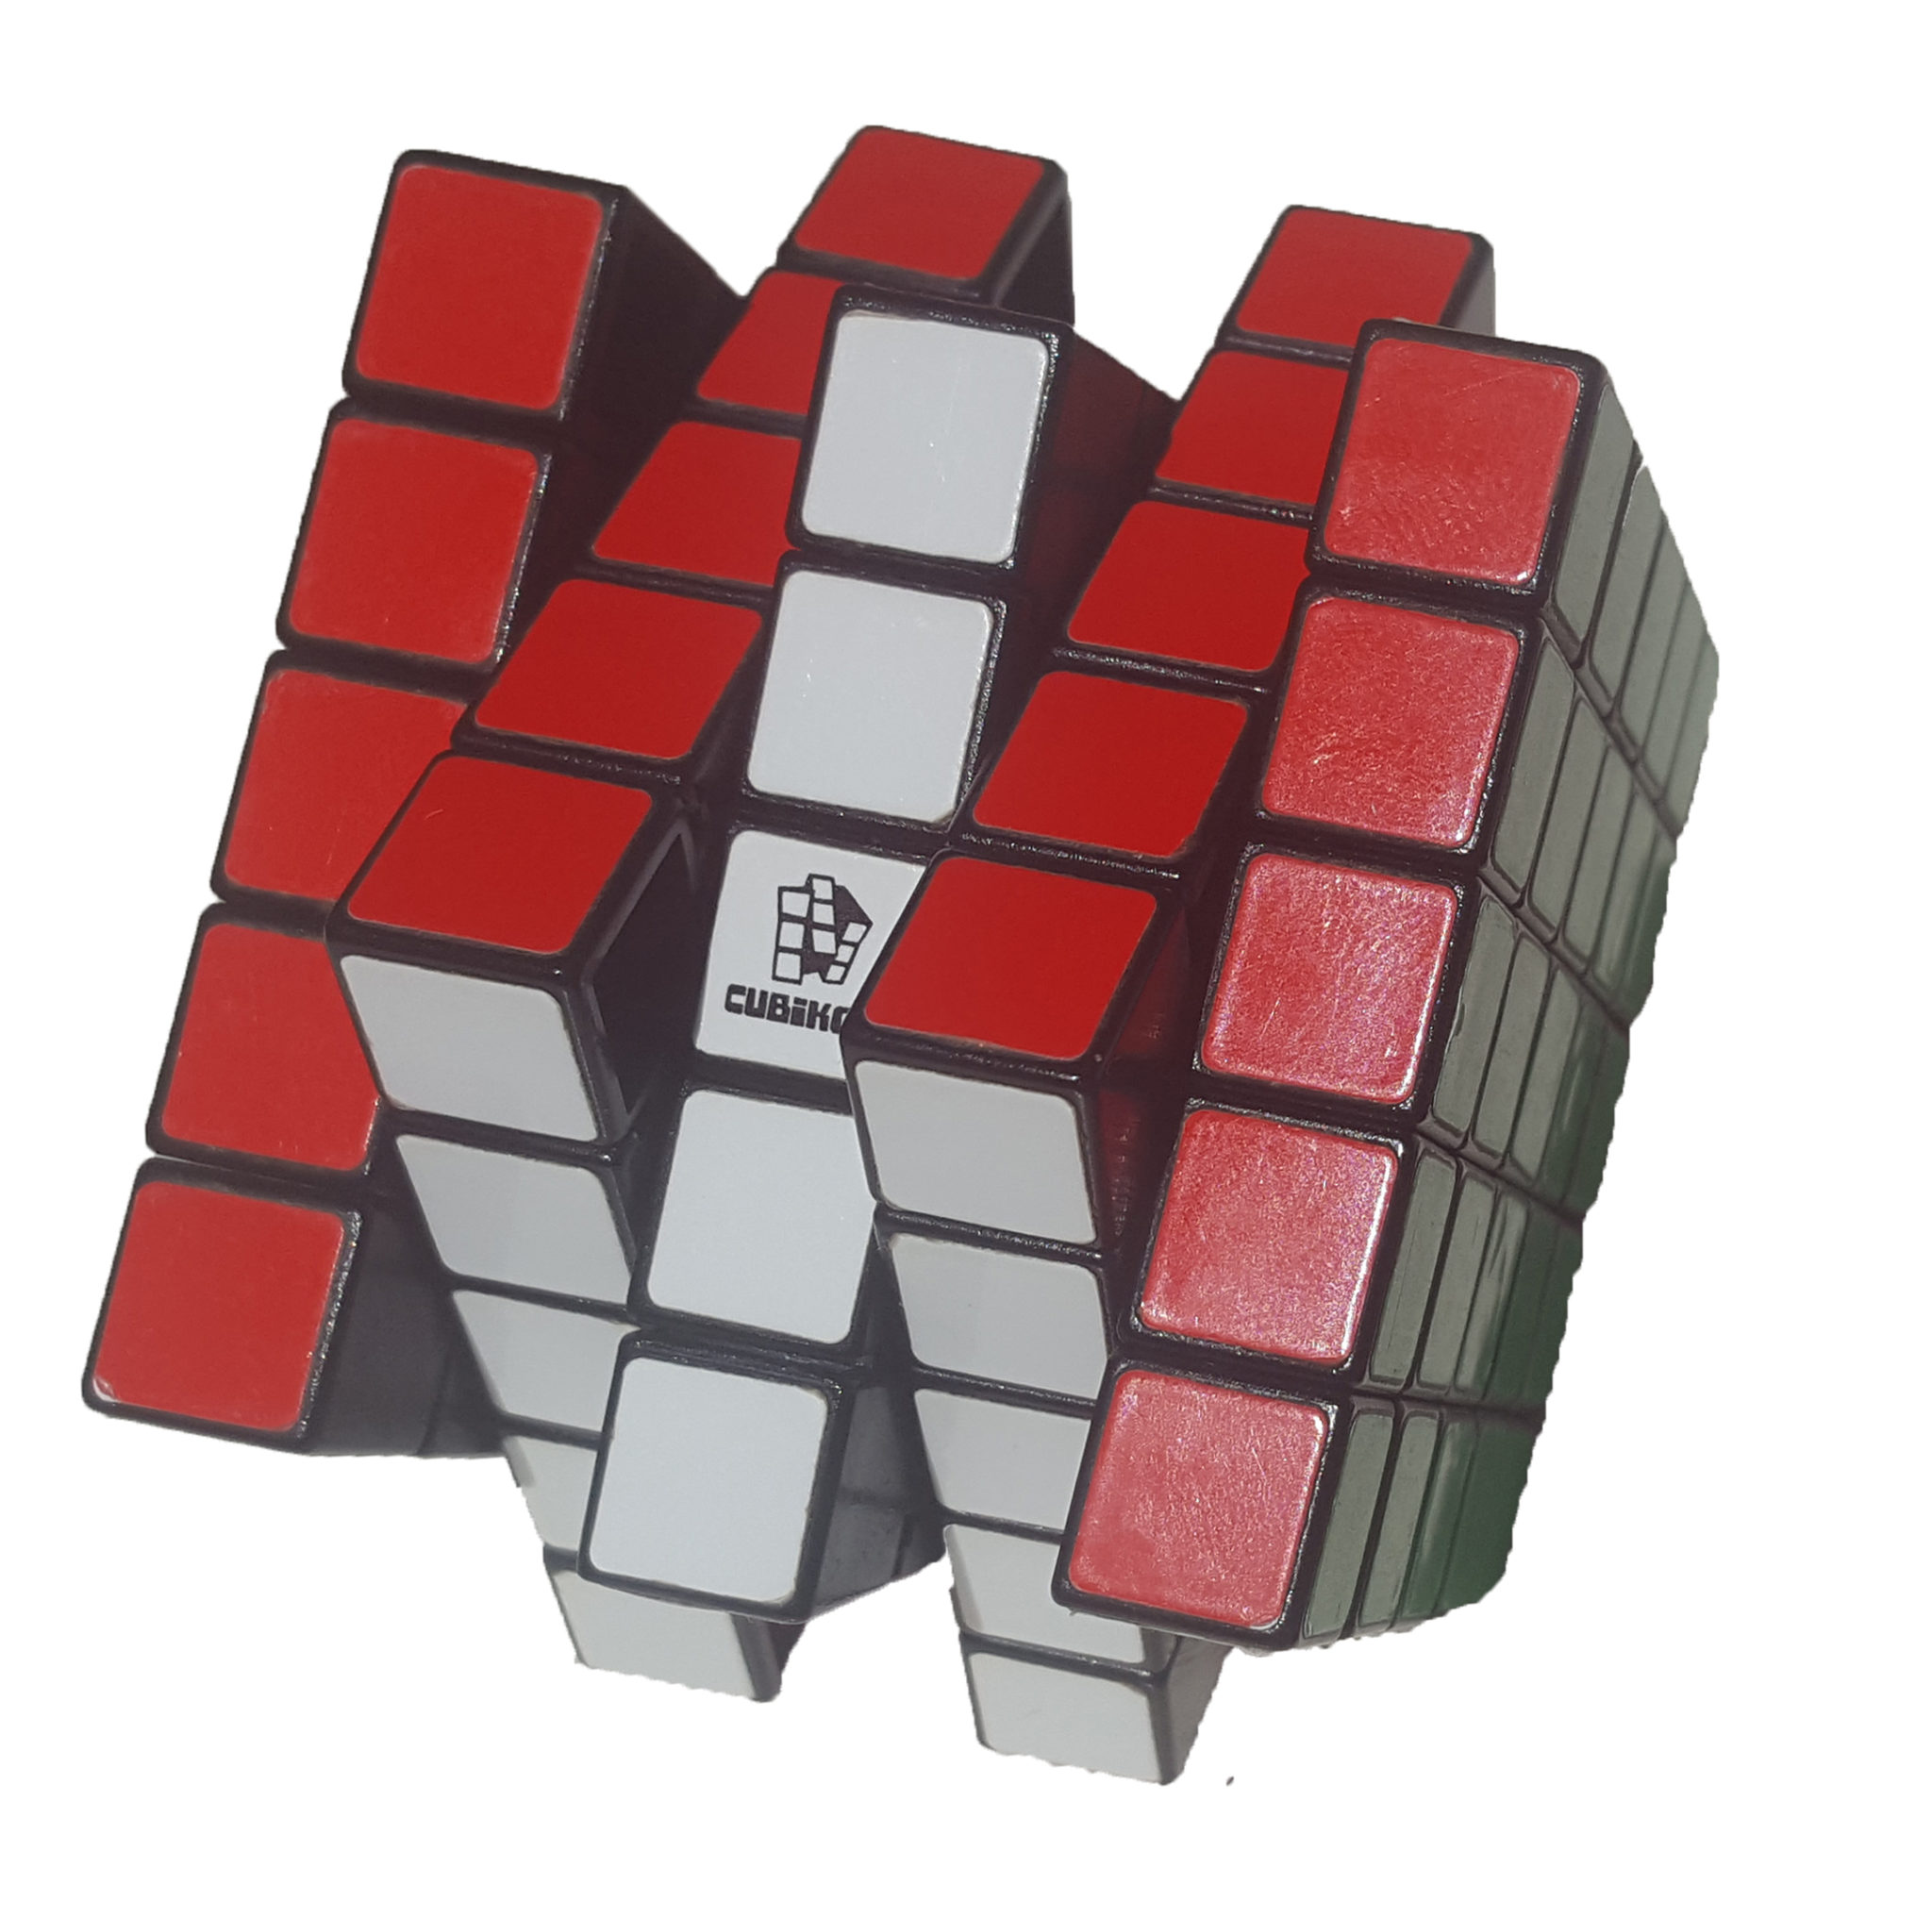 5x5 rubik's cube von Cubikon